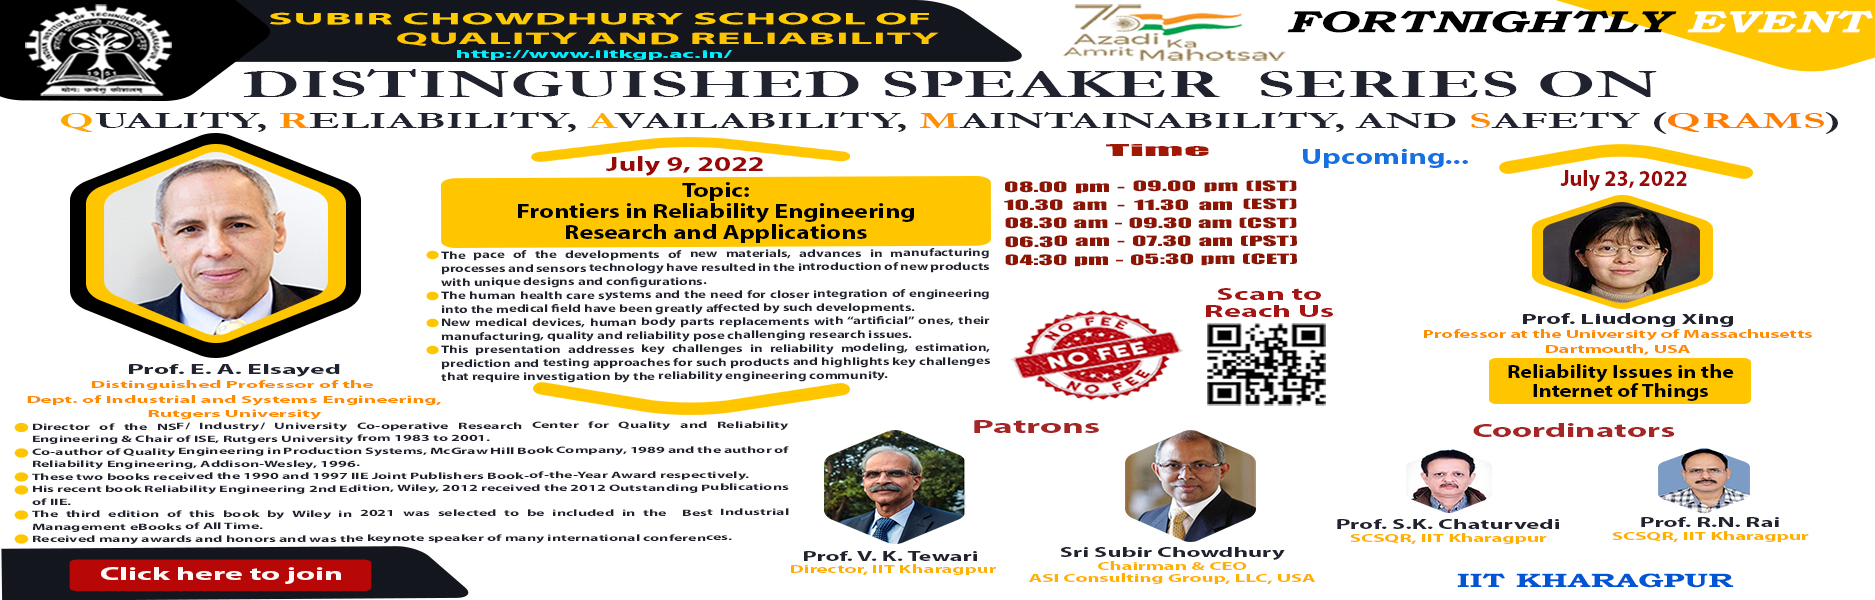 Subir Chowdhury School of Quality and Reliability